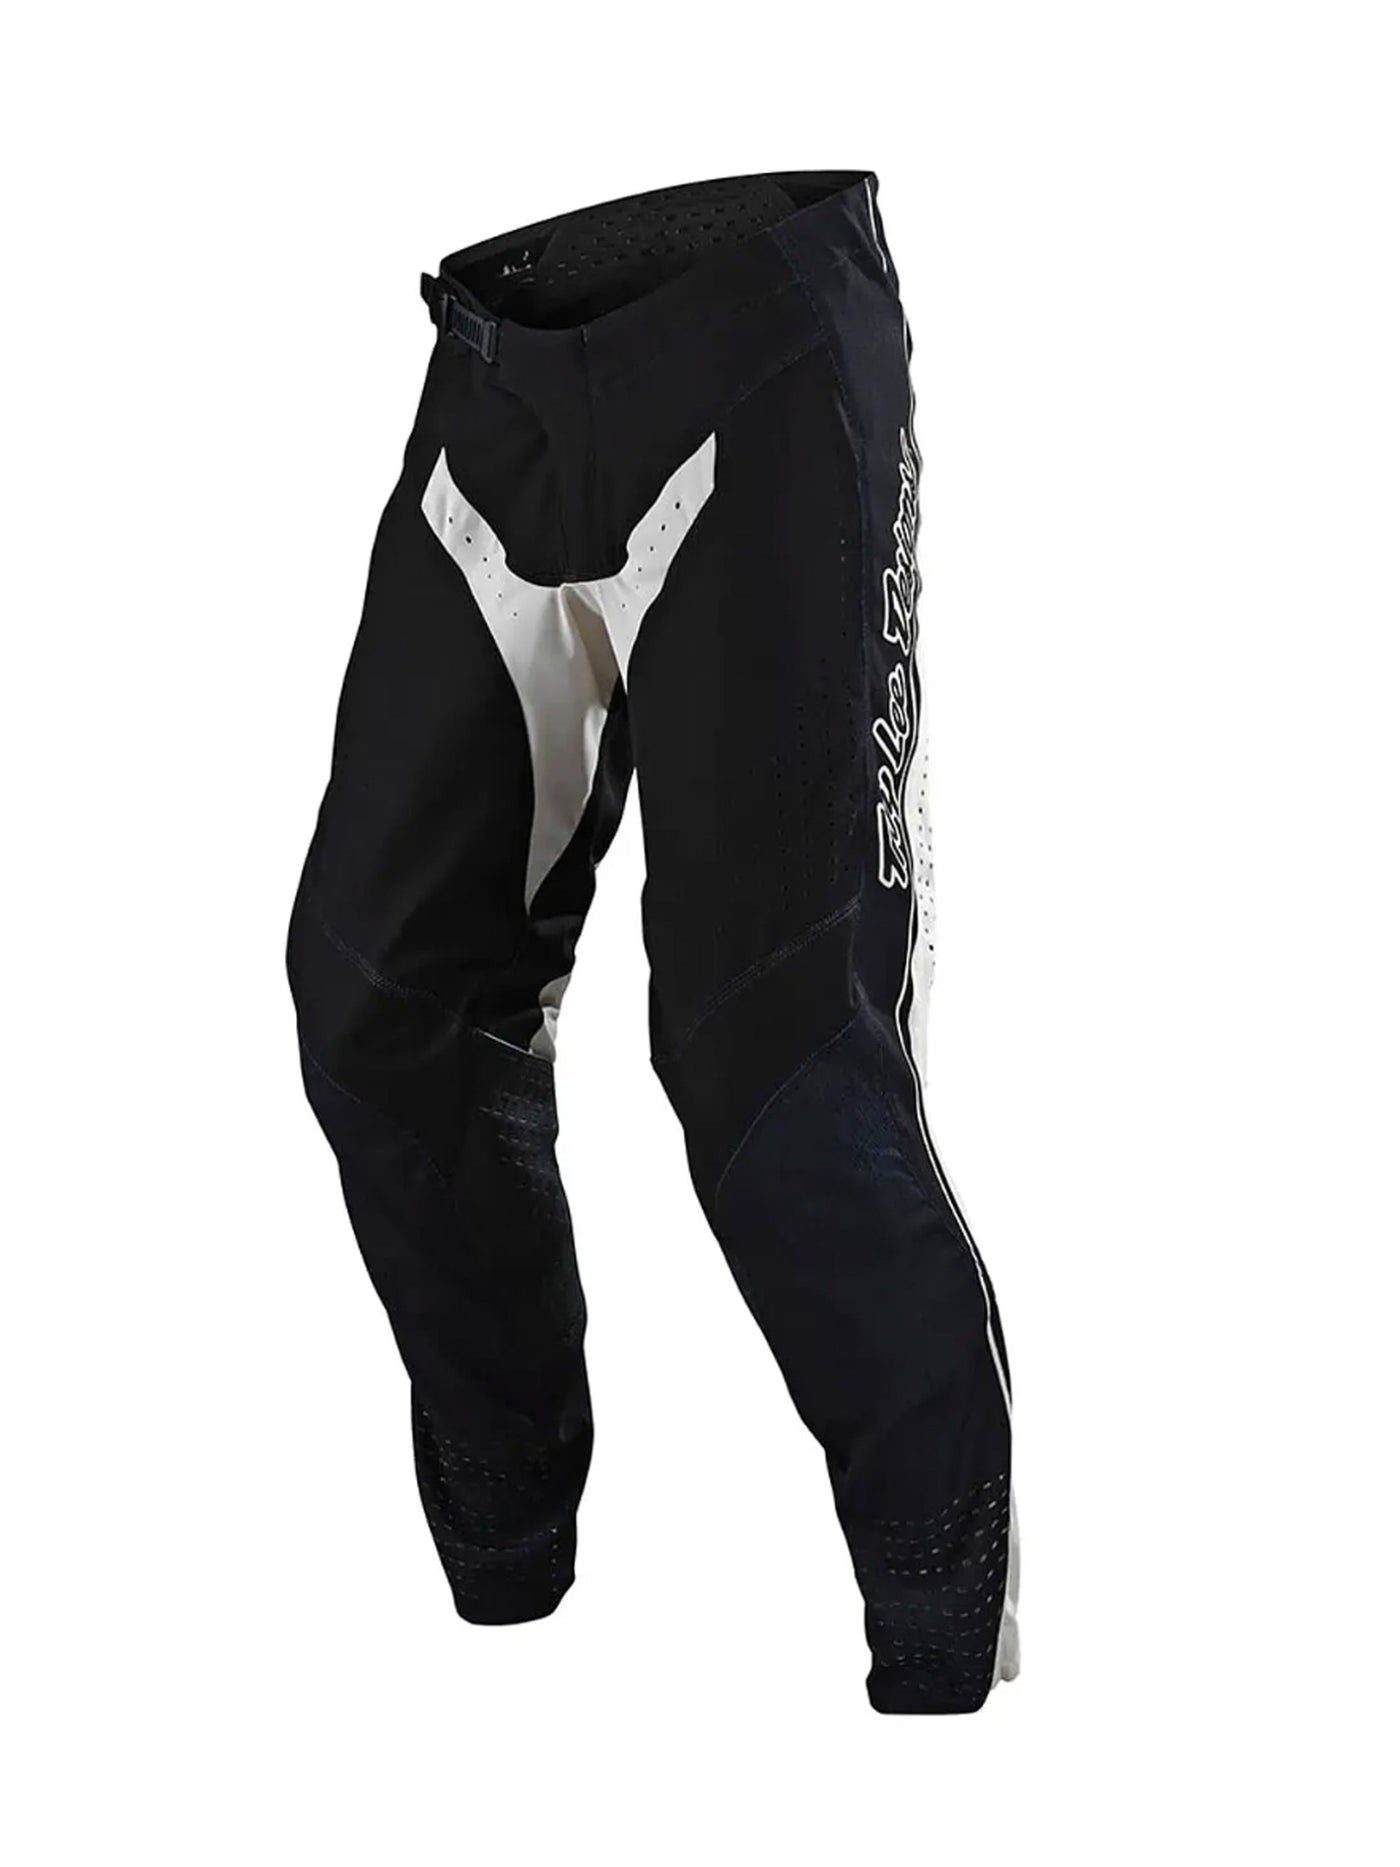 Troy Lee Designs Pantalones SE Pro Boldor Negro/Blanco